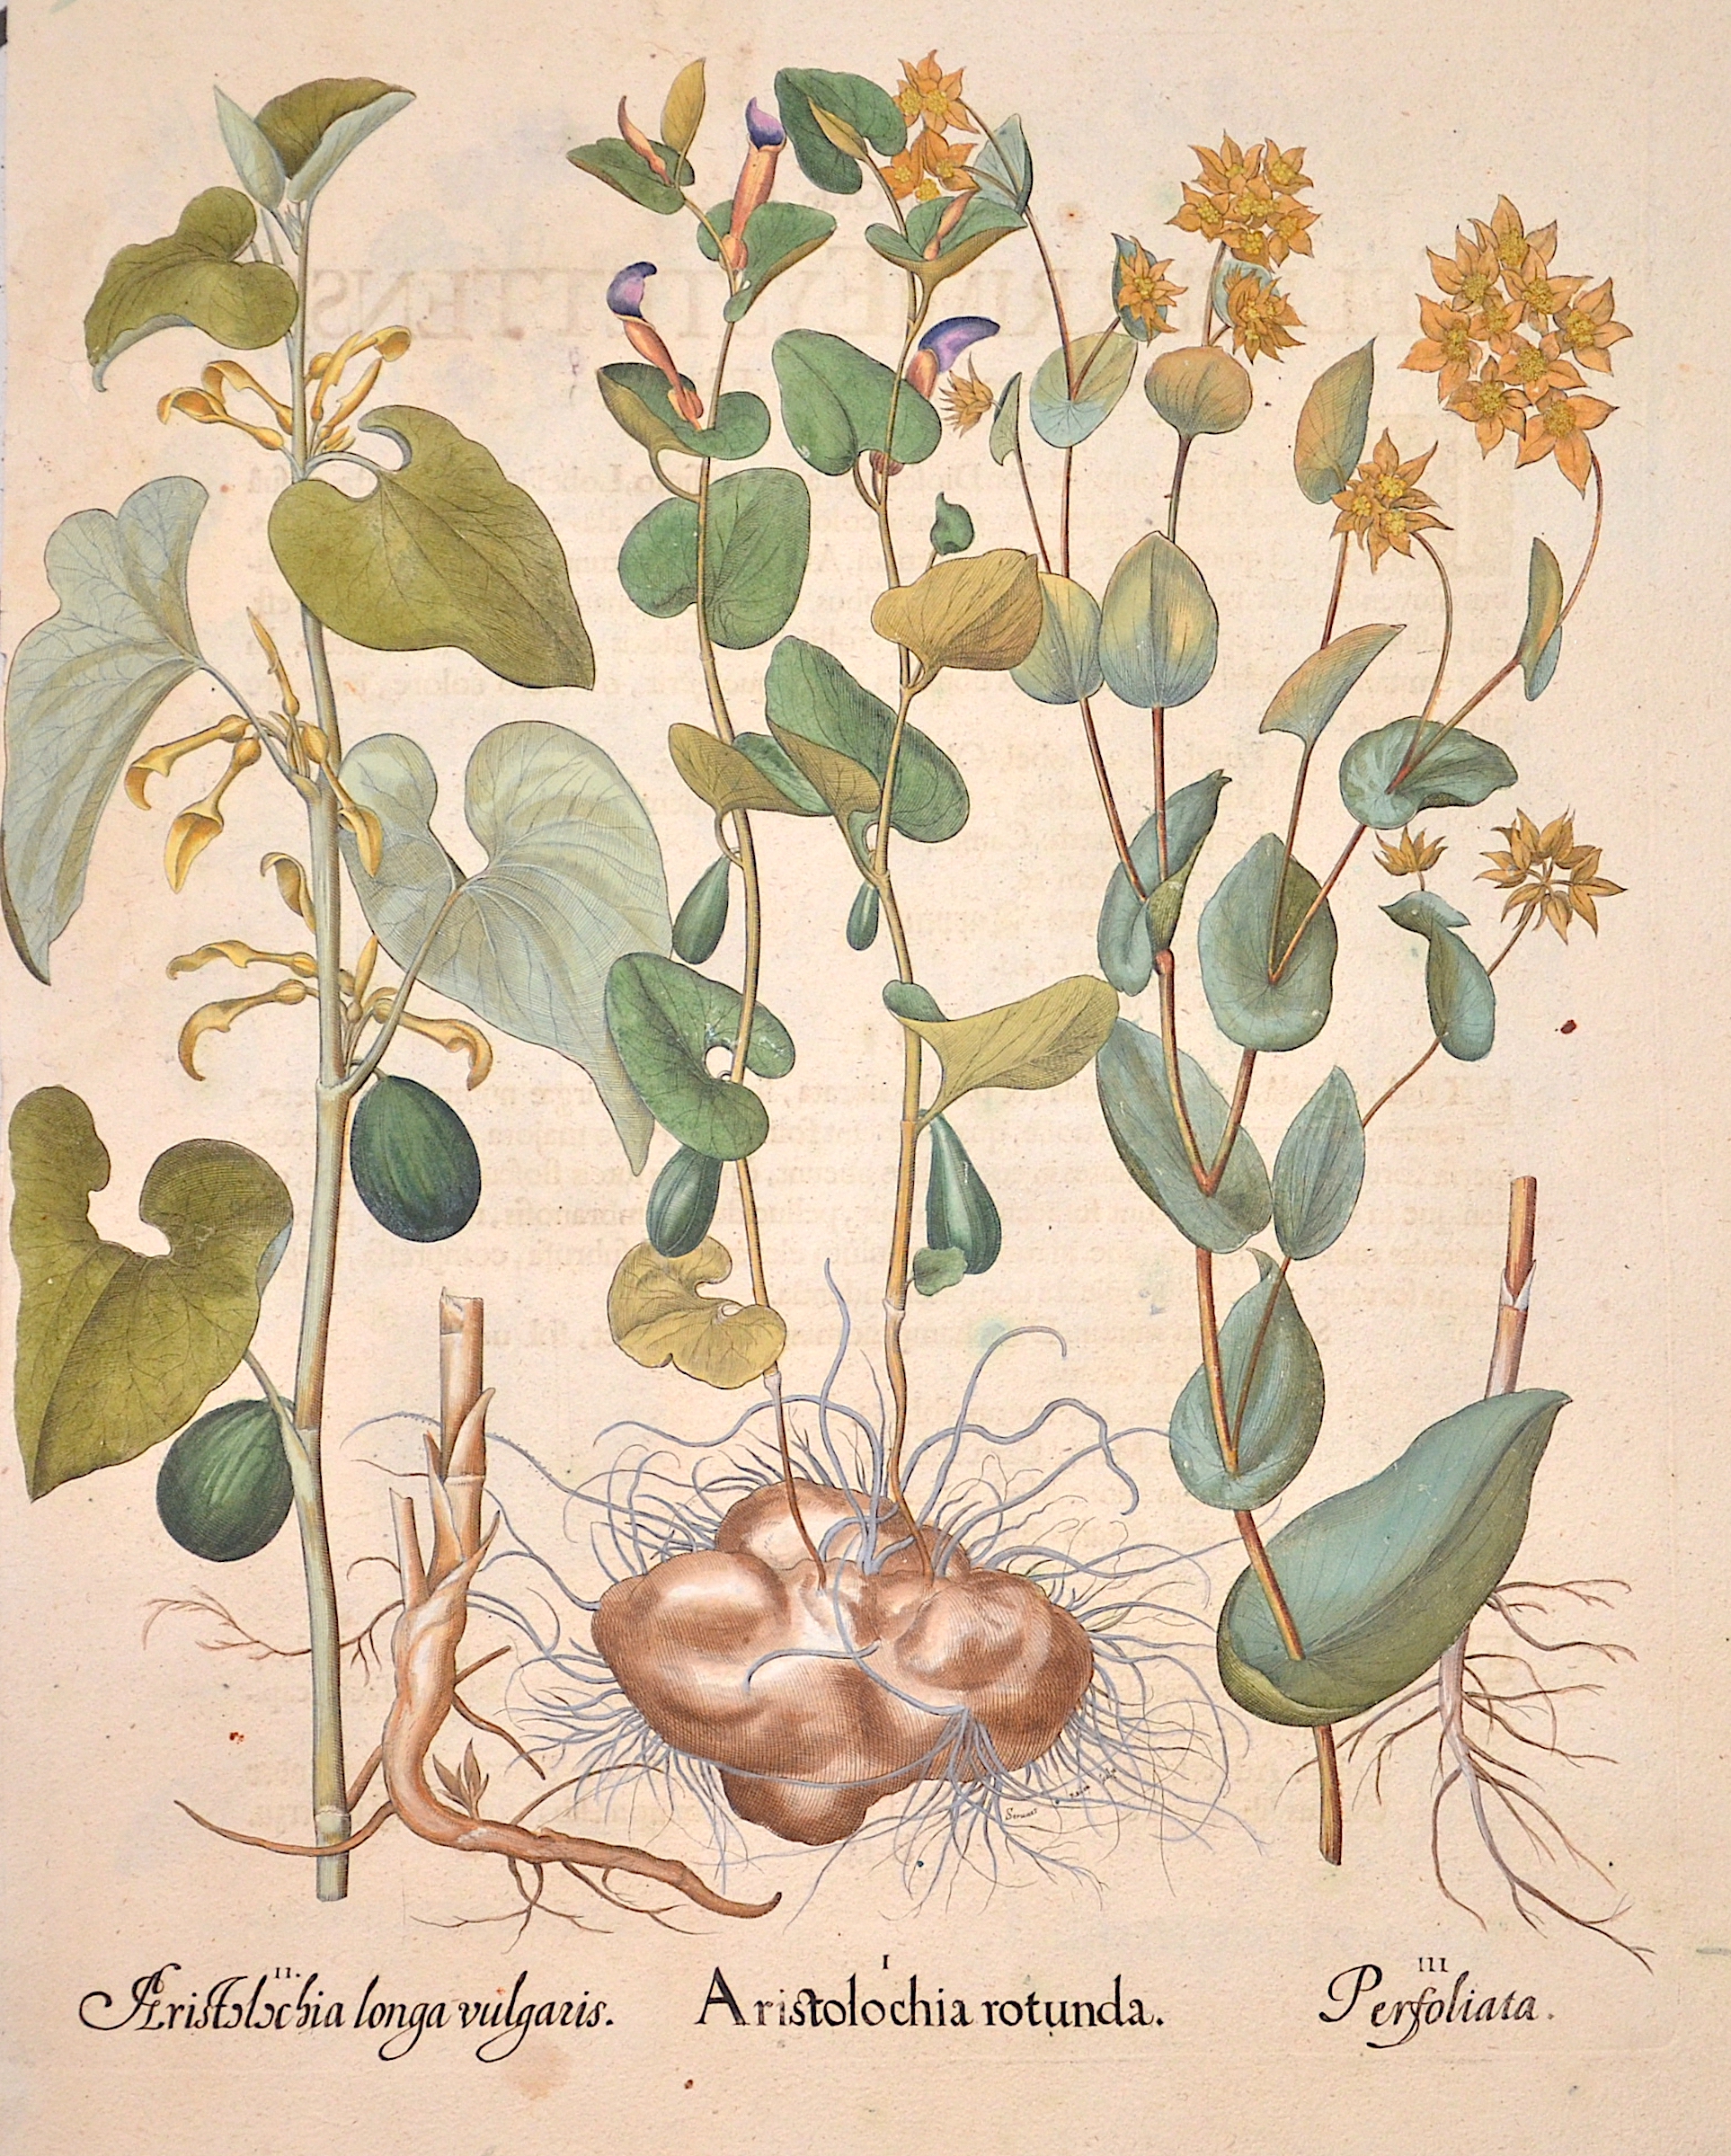 Besler Basilius Aristolochia rotunder/ Aristolochia longa vulgaris/ Perfoliata